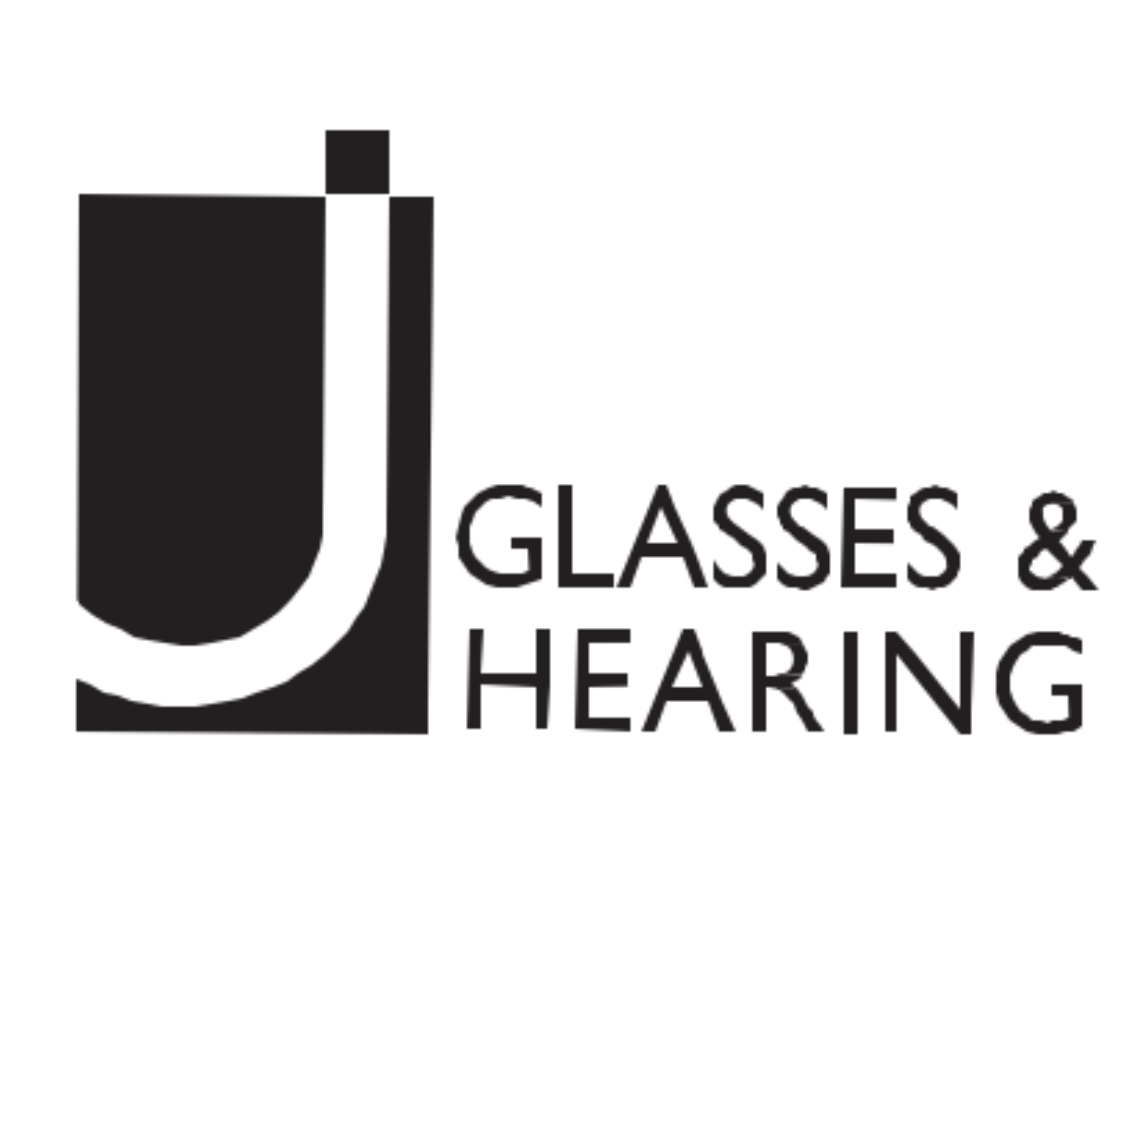 J Glasses & Hearing.png